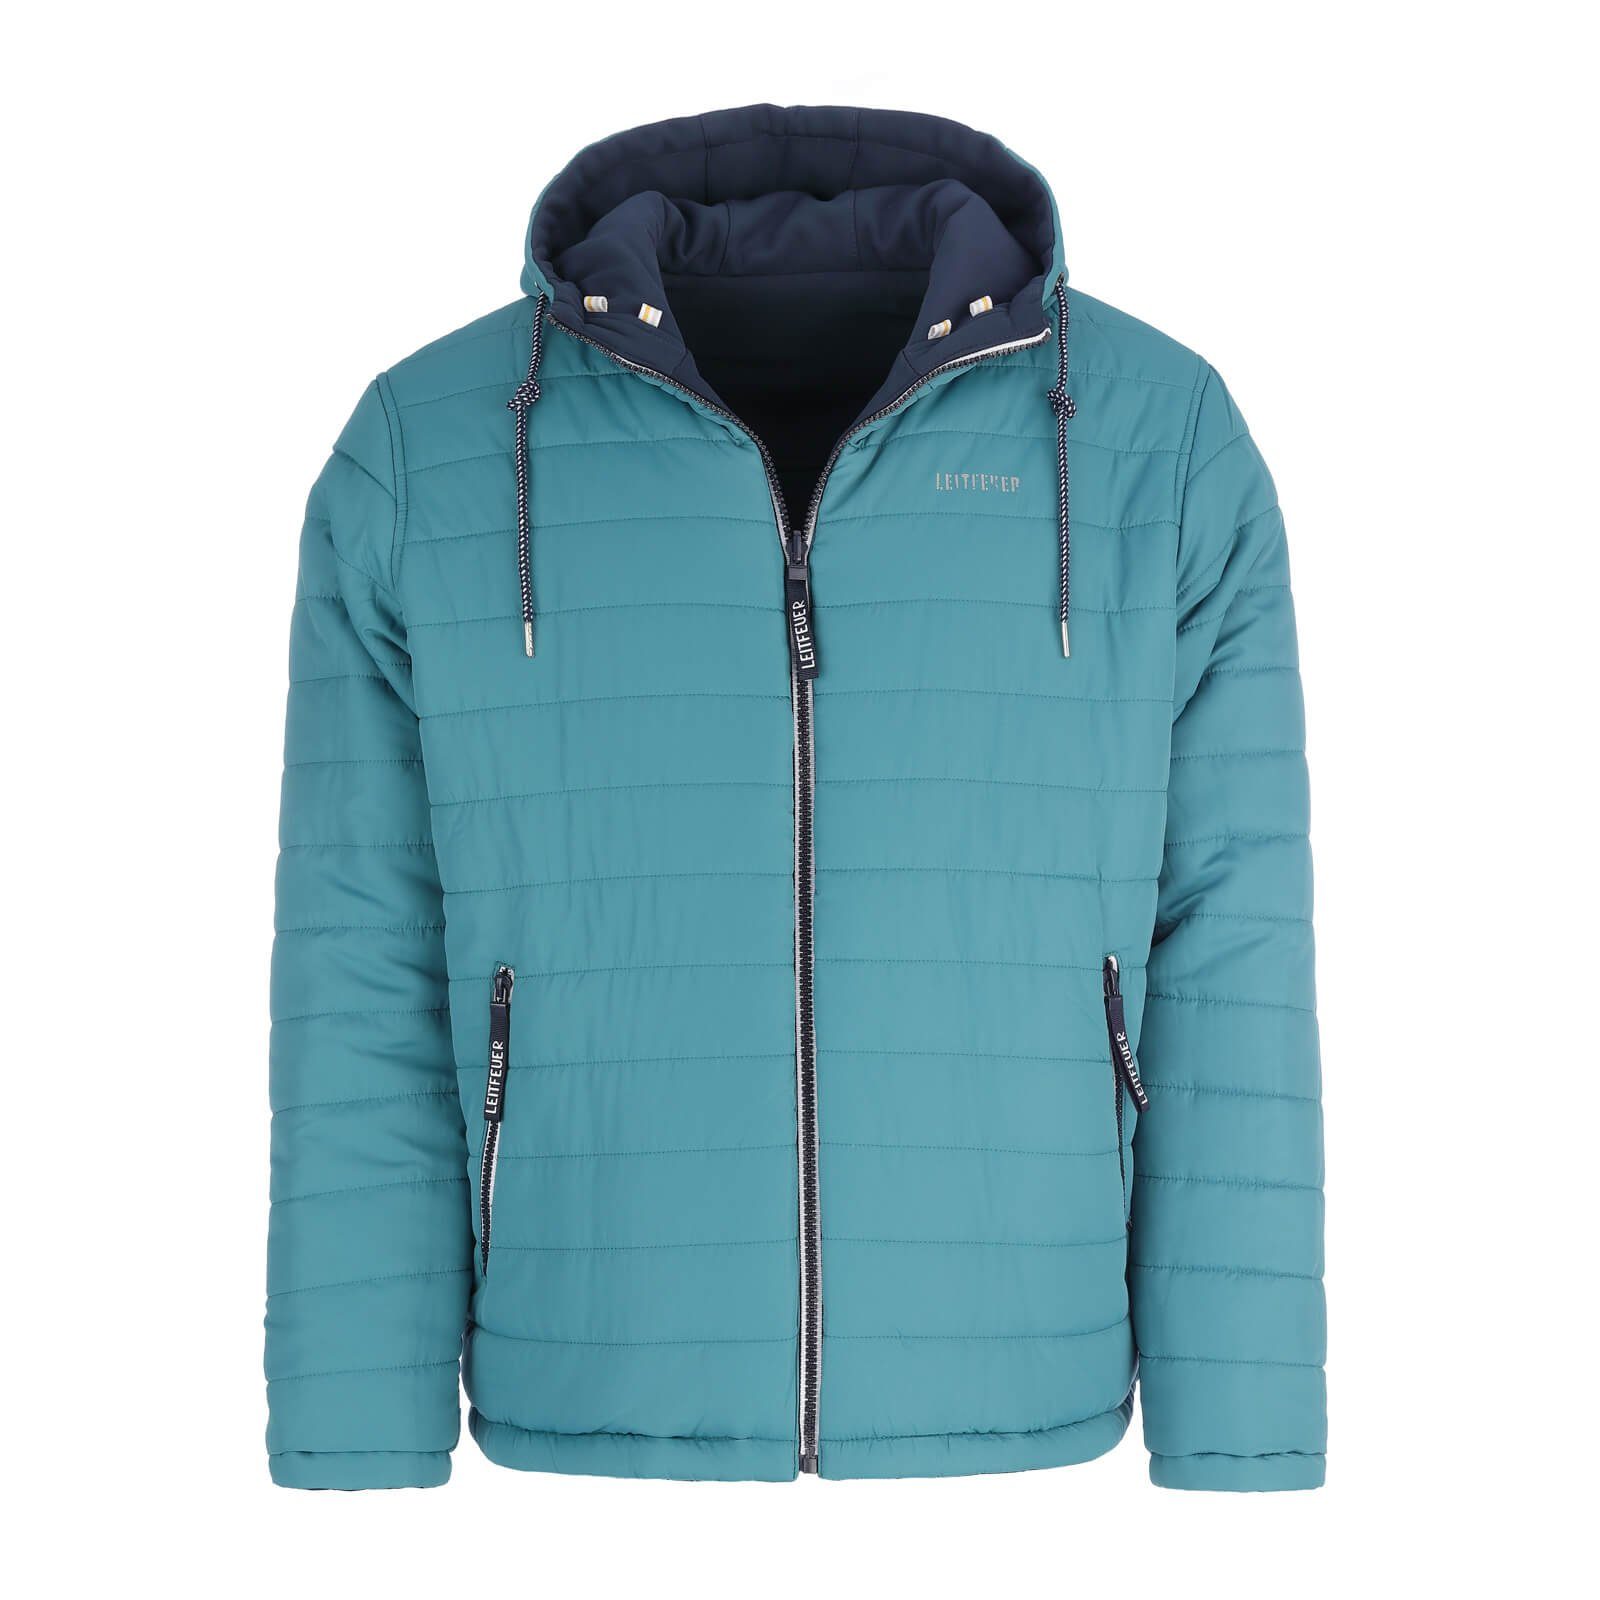 Leitfeuer Wendejacke Winterjacke petrol/dunkelblau Herren - warme Kapuzenjacke Jacke zweifarbig Wattierung